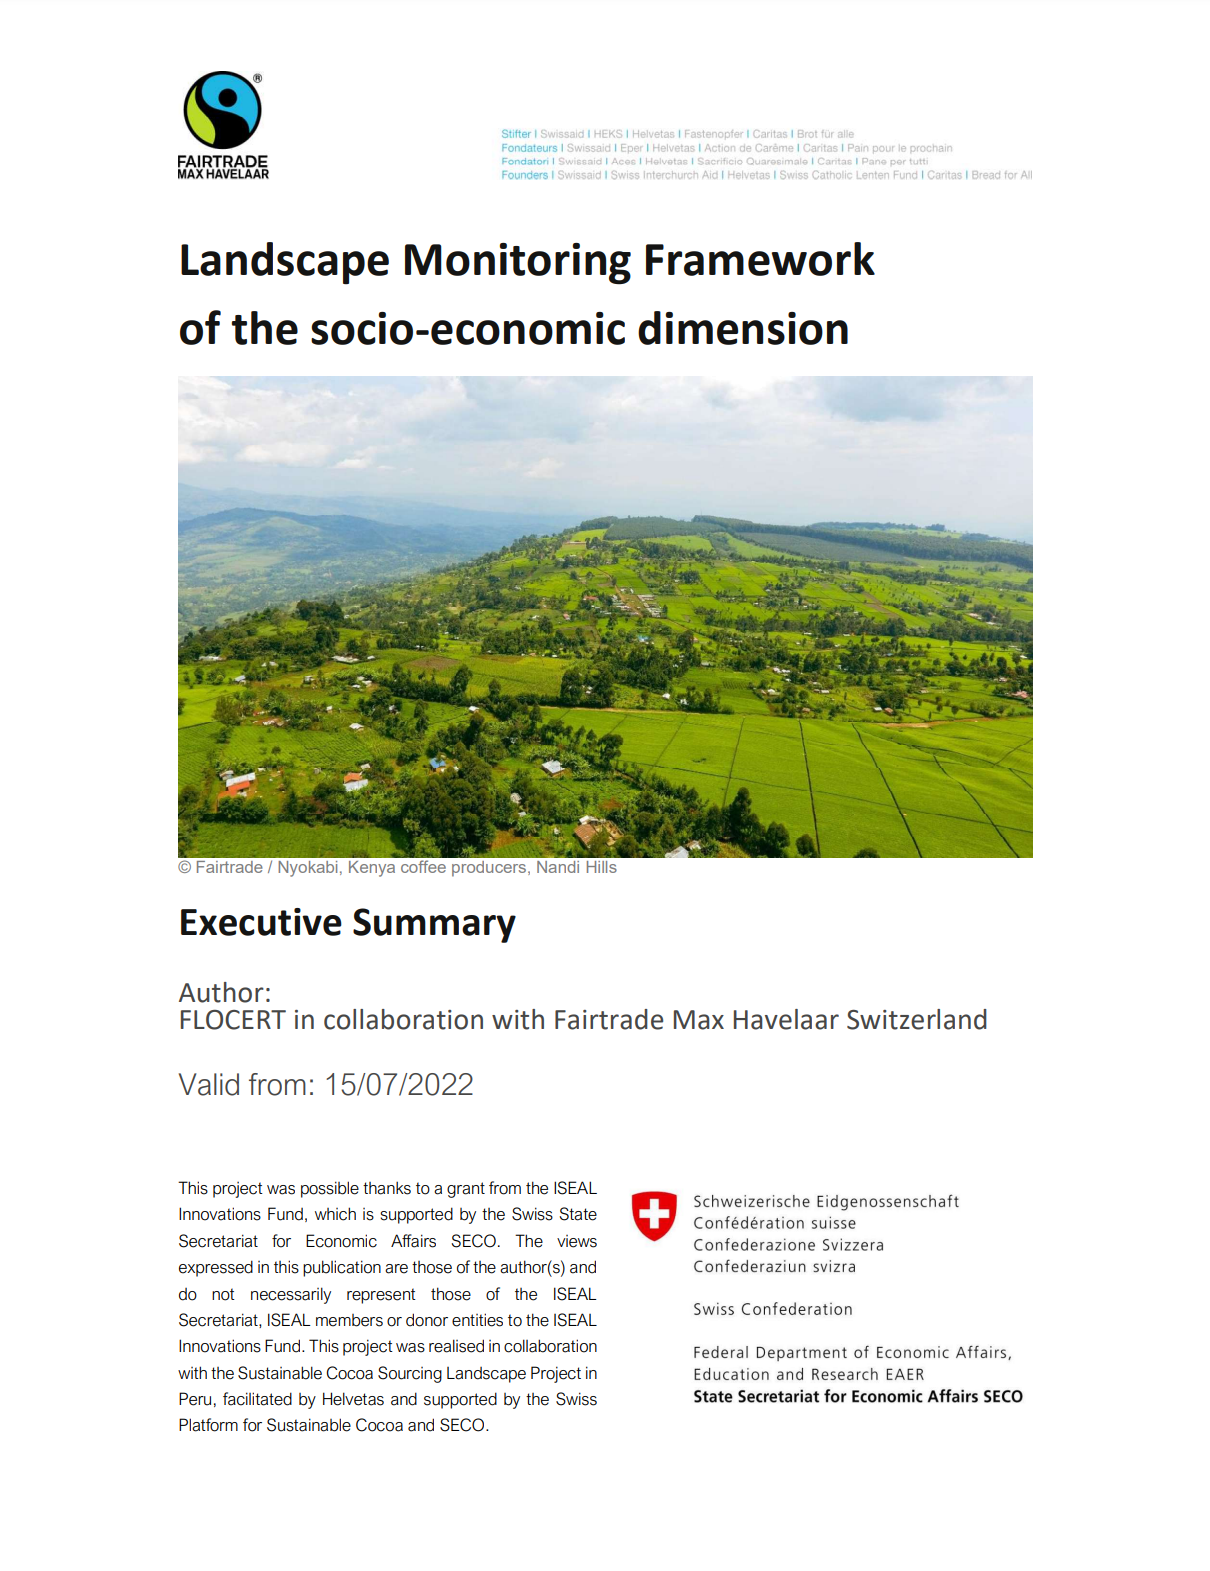 Landscape Monitoring Framework of the Socio-Economic Dimension